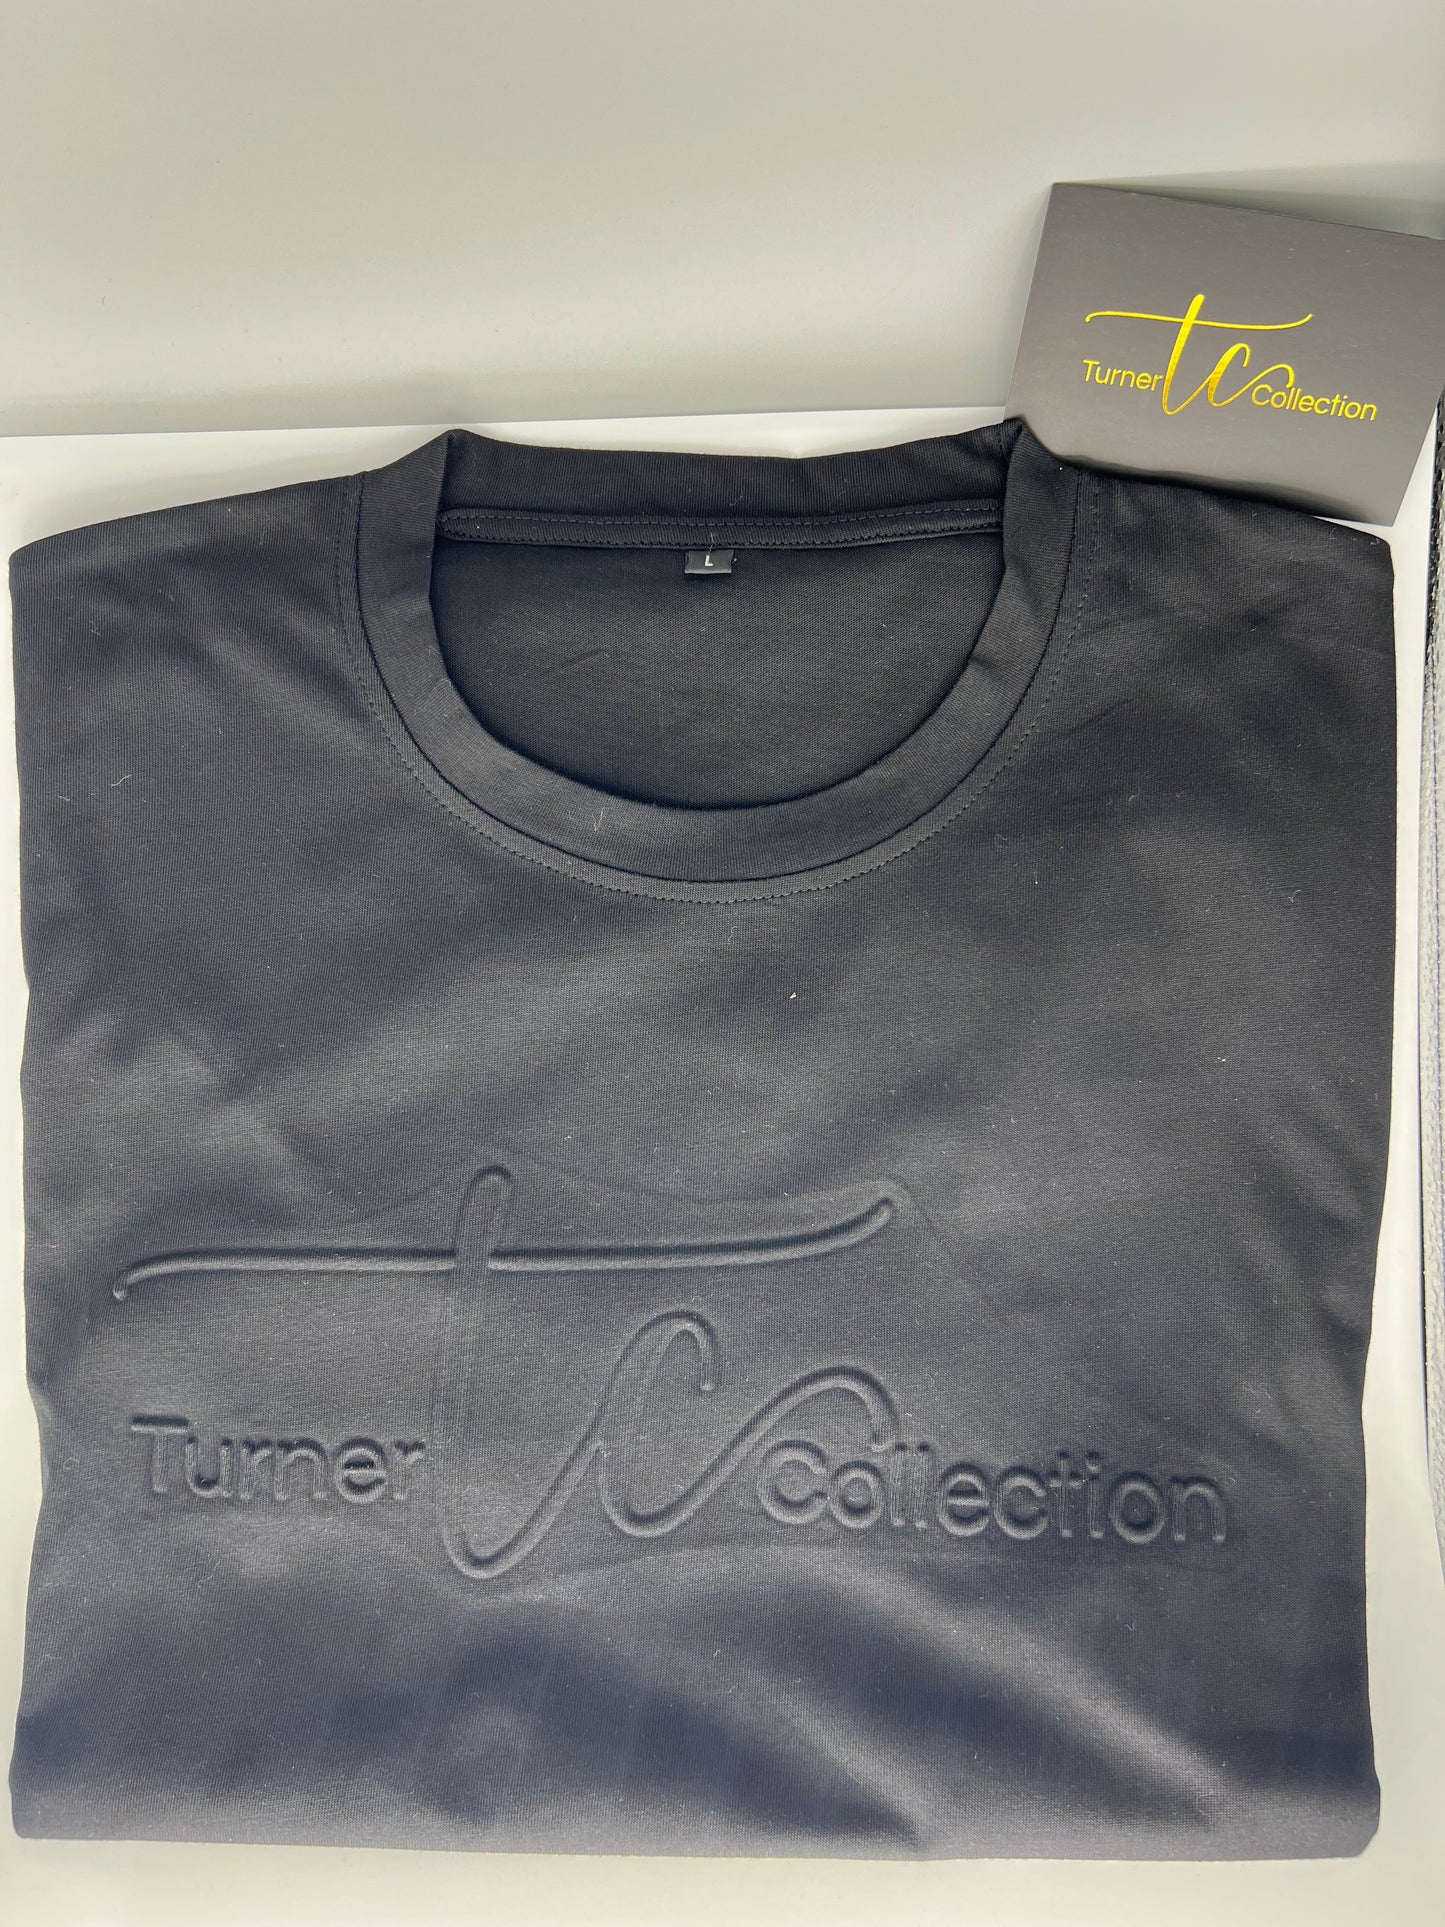 Black Turner Collection T-Shirt